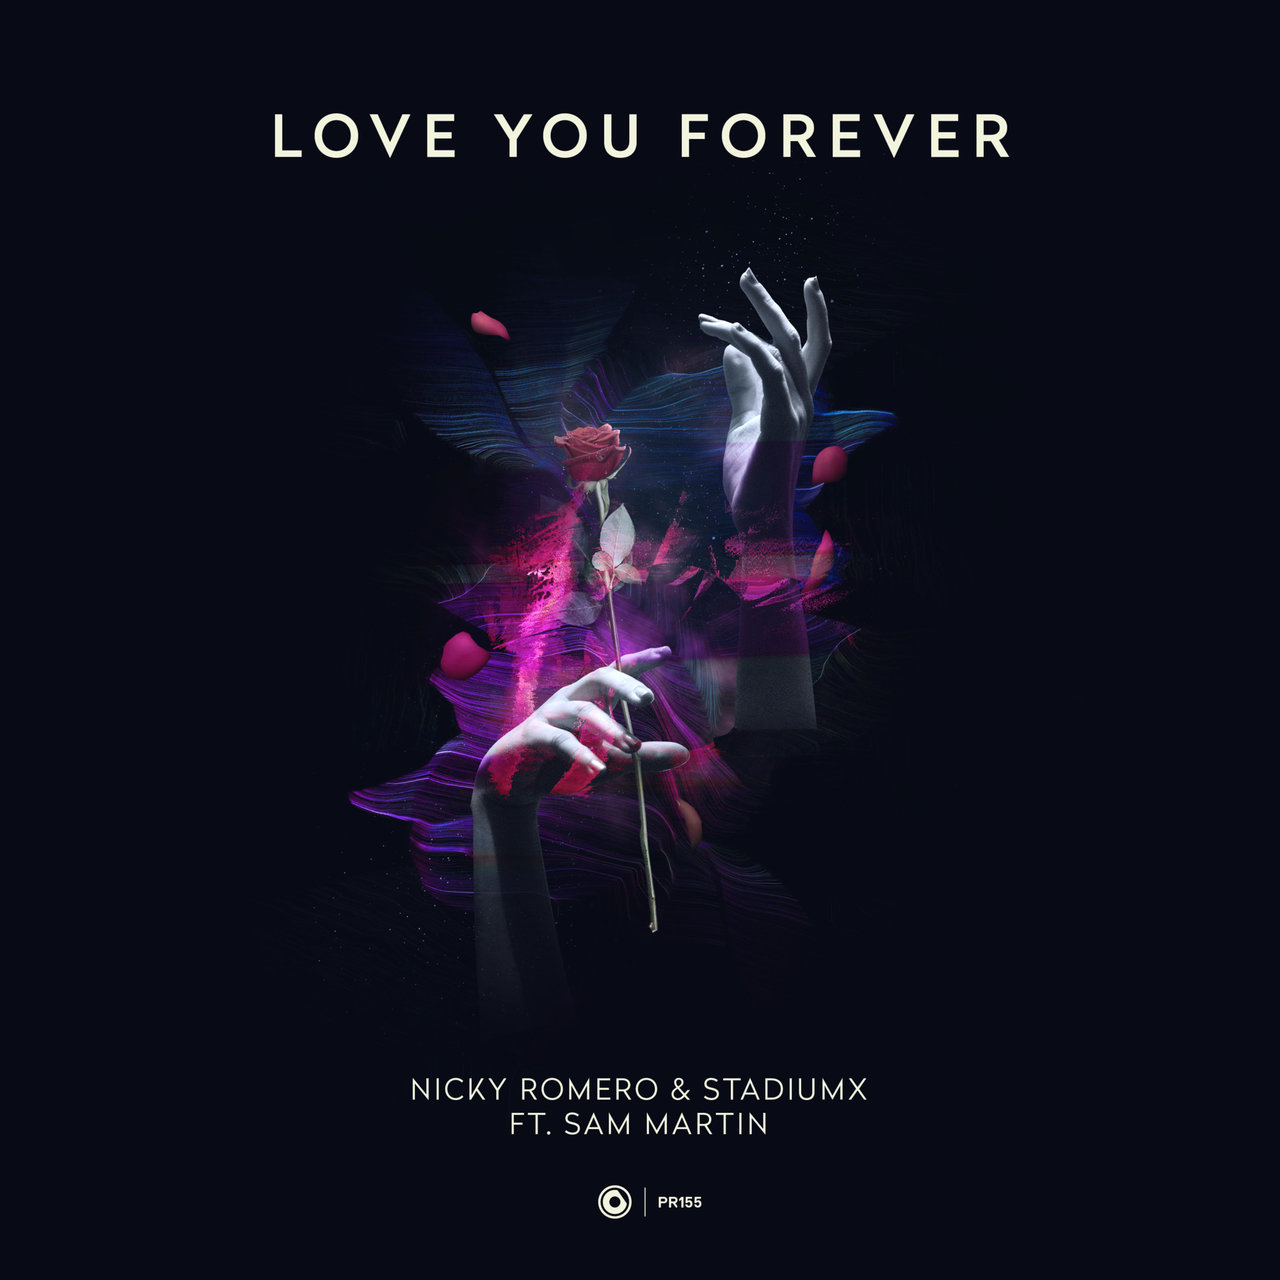 Nicky Romero & Stadiumx featuring Sam Martin — Love You Forever cover artwork